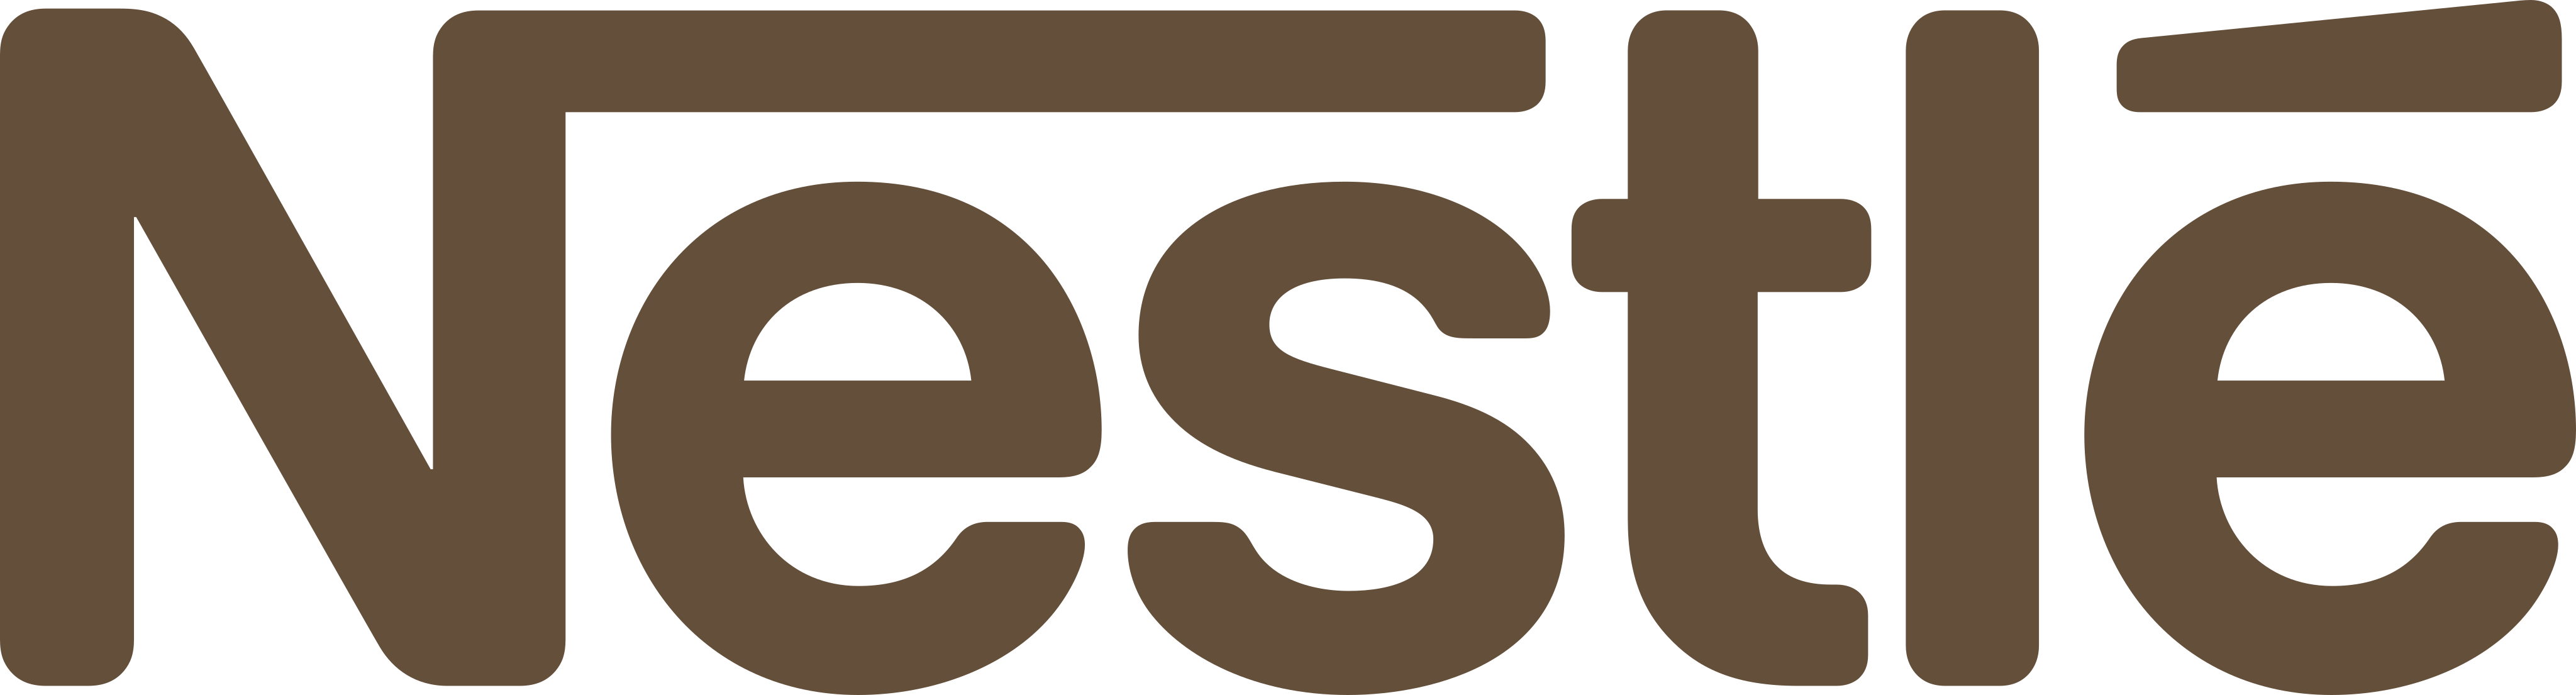 Logo Nestle Png Transparent Logo Nestle Png Images Pl Vrogue Co